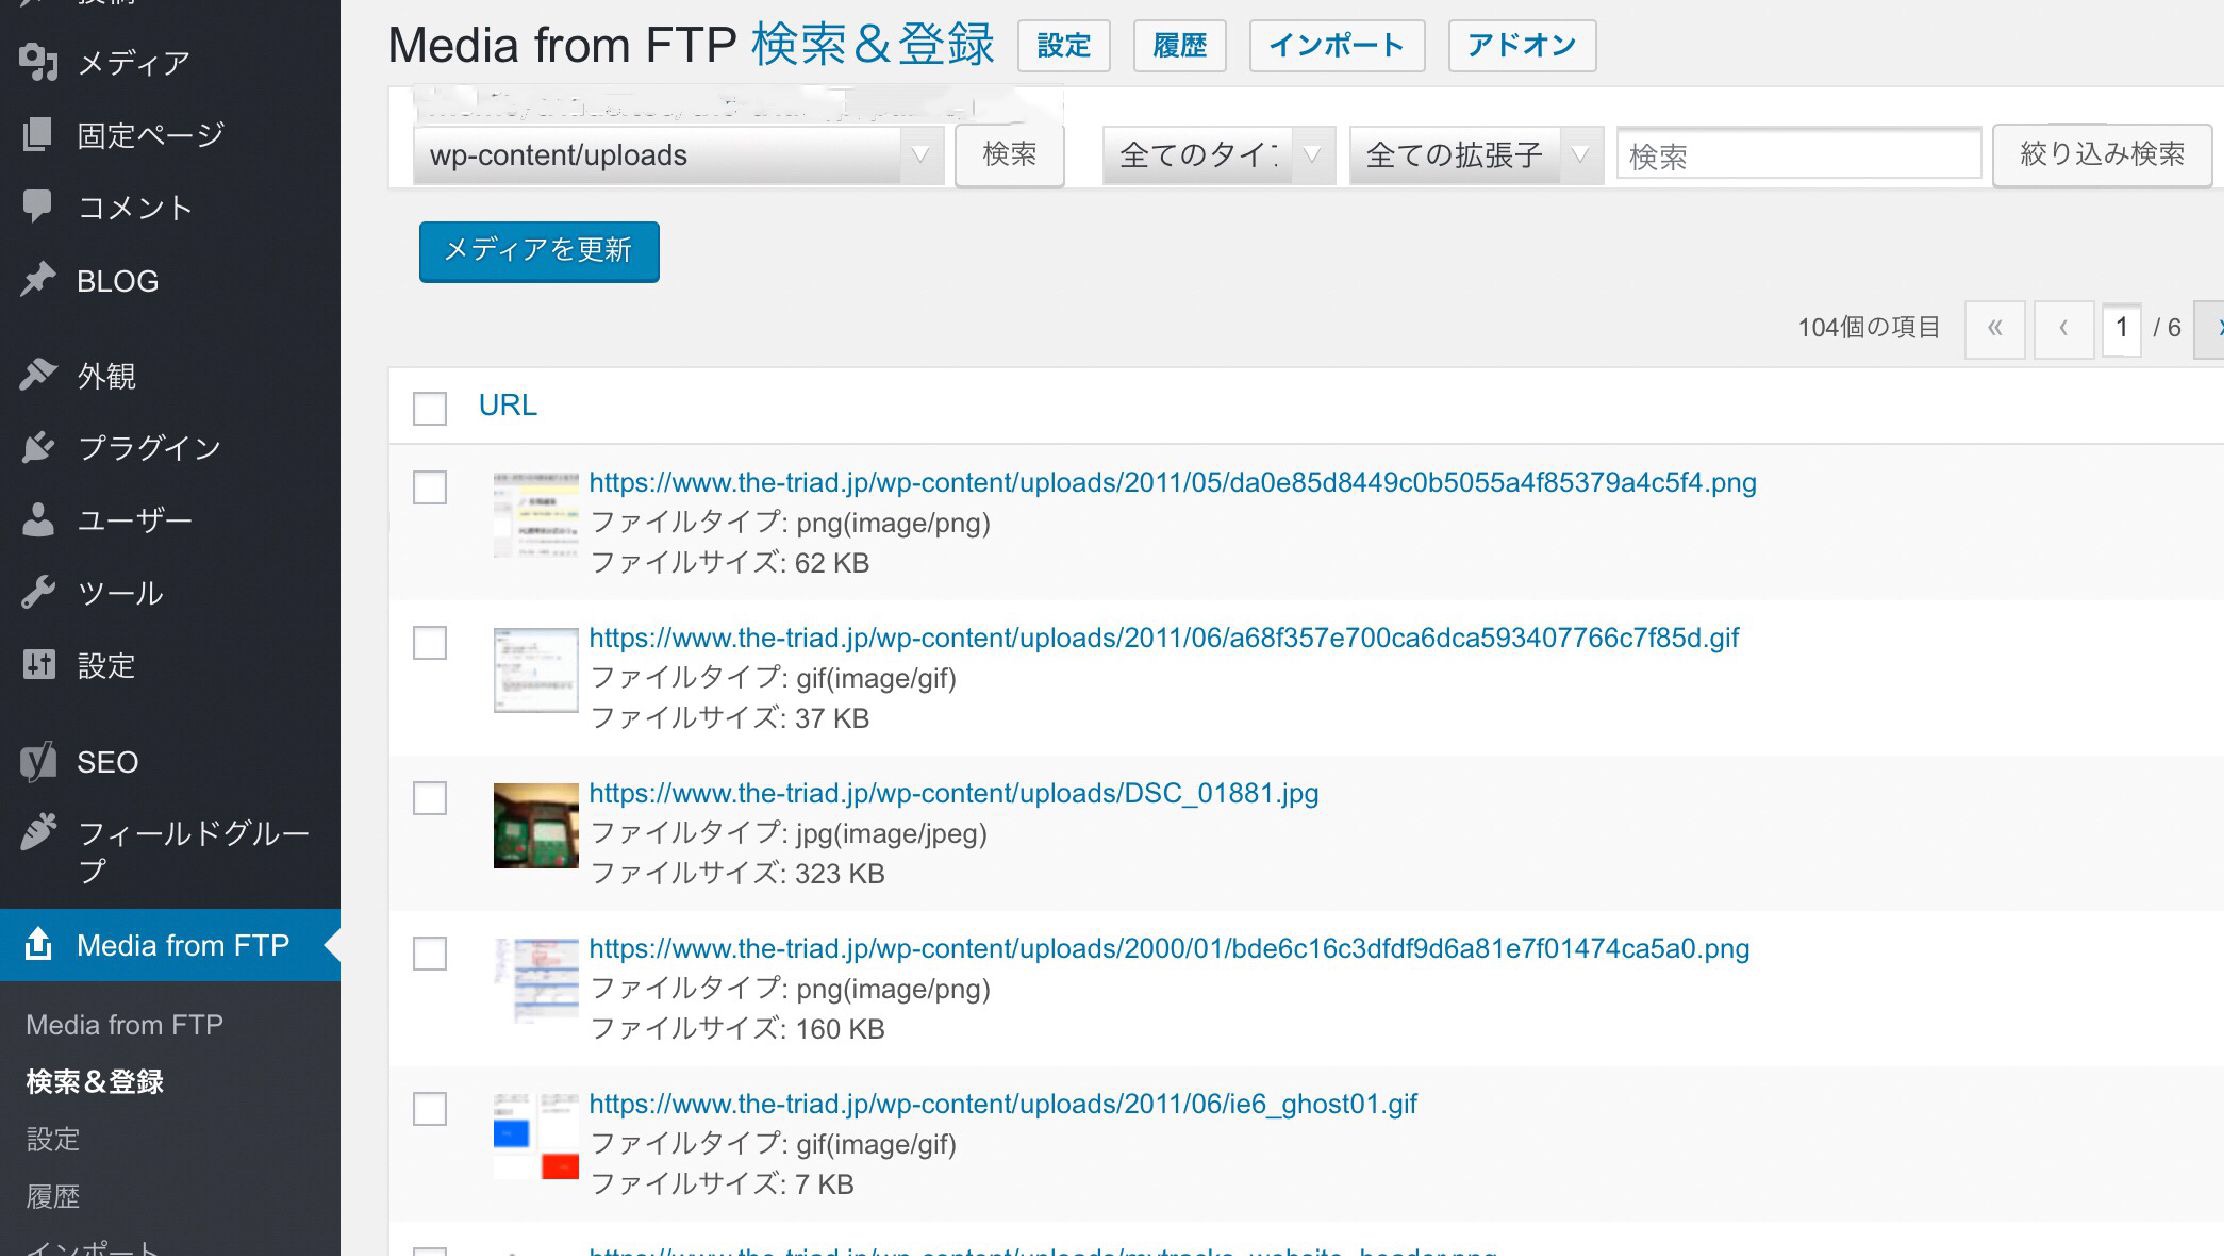 Media From FTPの検索と登録の画面